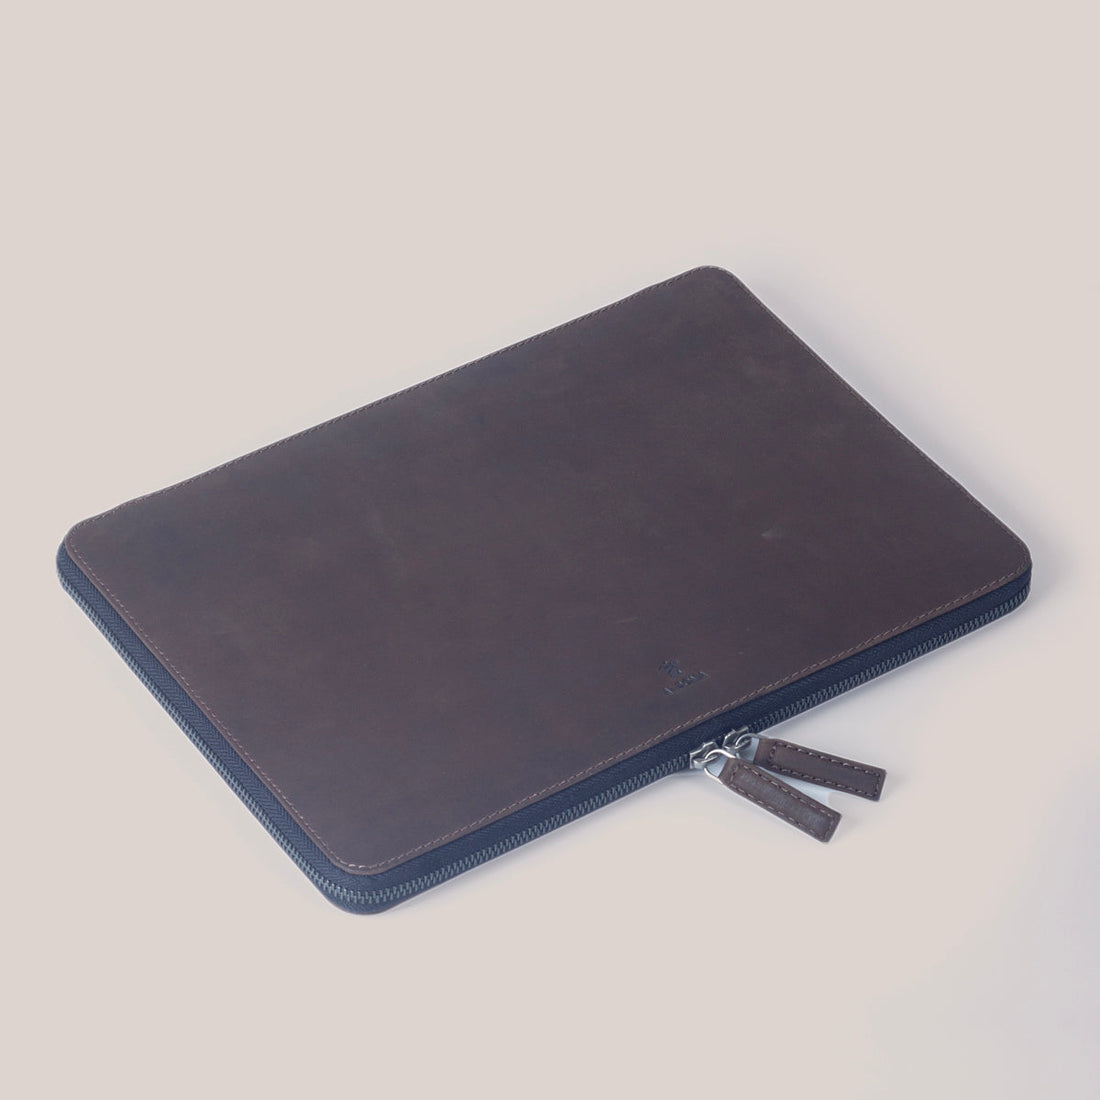 Microsoft Surface Laptop 15 Zippered Laptop Case - Vintage Tan